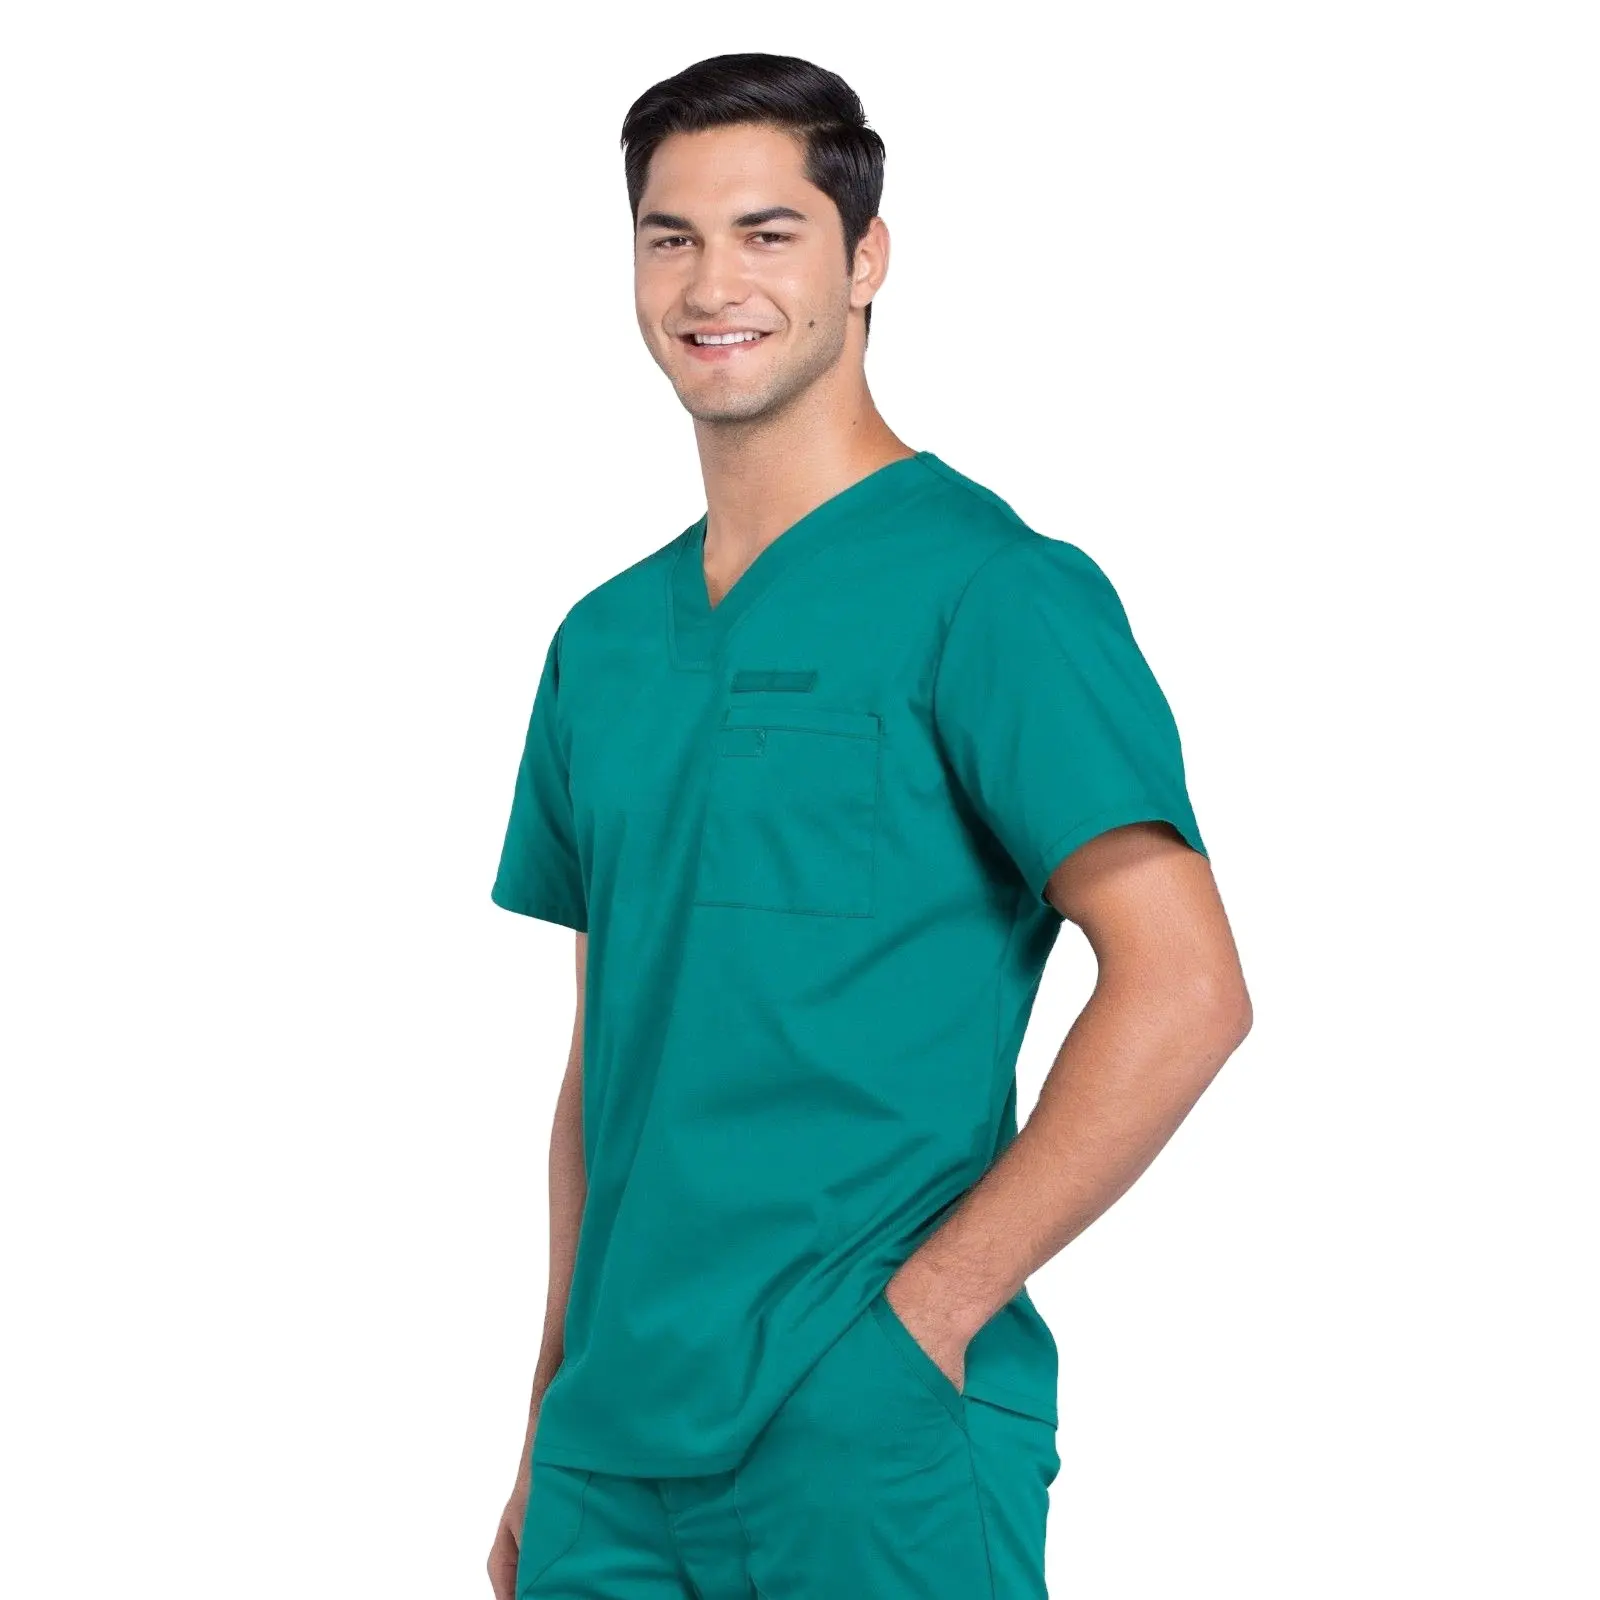 Uniforme médico para hombre, de alta calidad uniforme médico, excelente tono verde, ajuste personalizado, cómodo, 100% tela de algodón, uniforme de Hospital, médico, transpirable